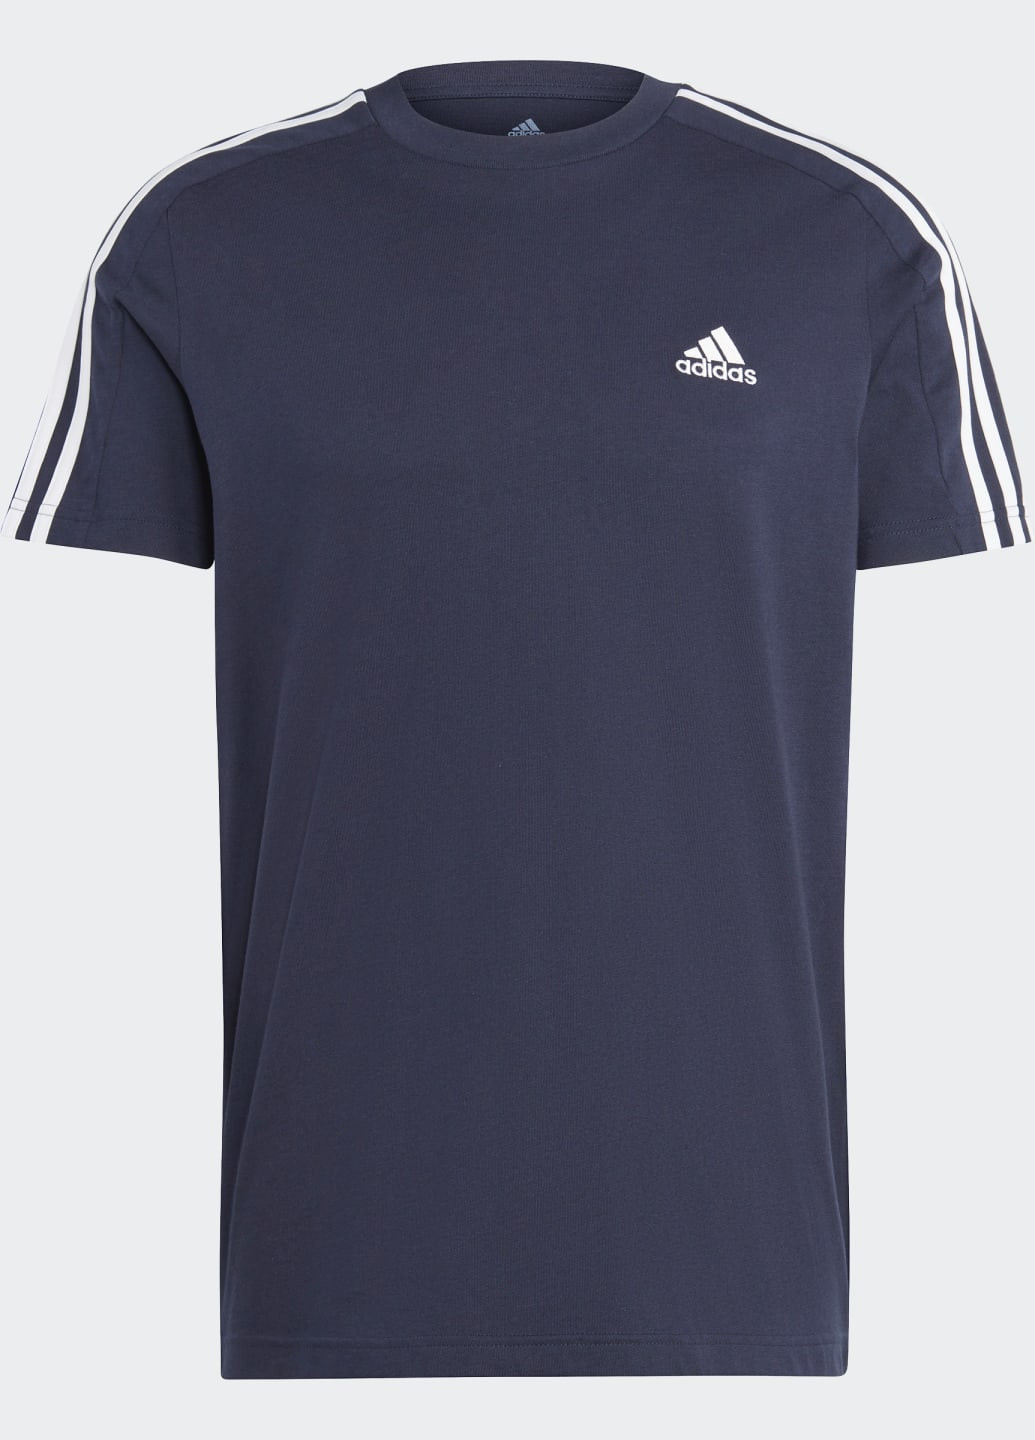 Синяя футболка essentials single jersey 3-stripes adidas